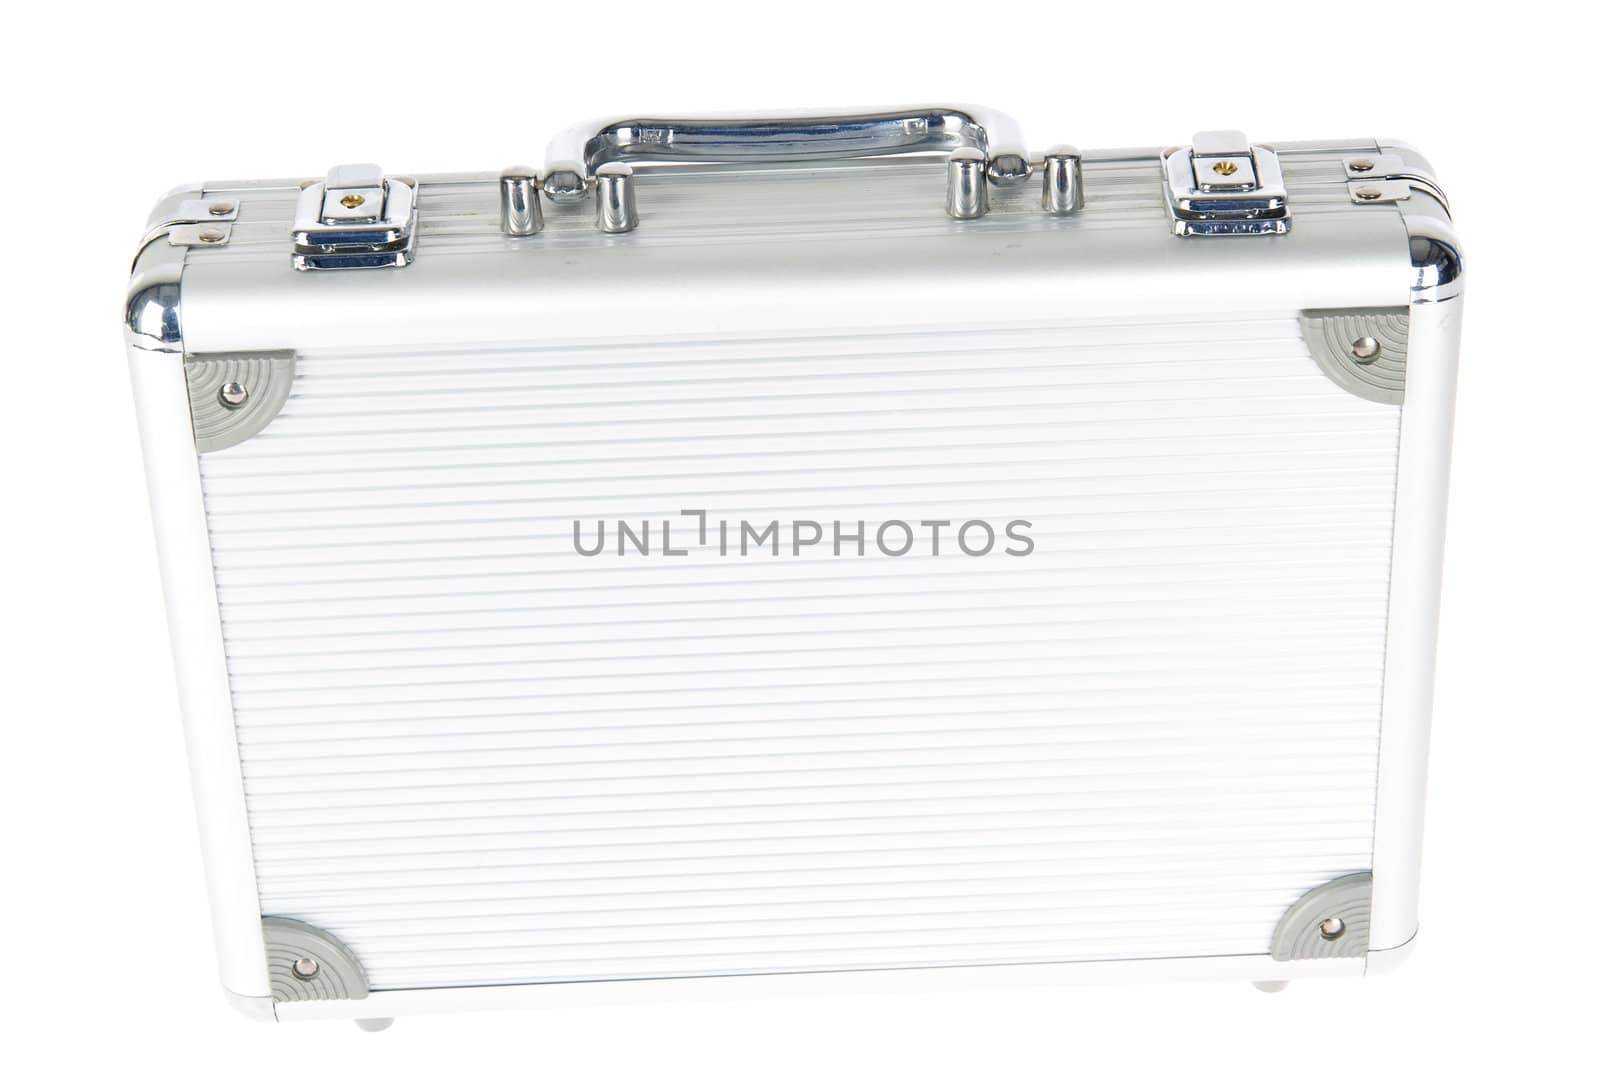 a professional aluminium suitcase on white